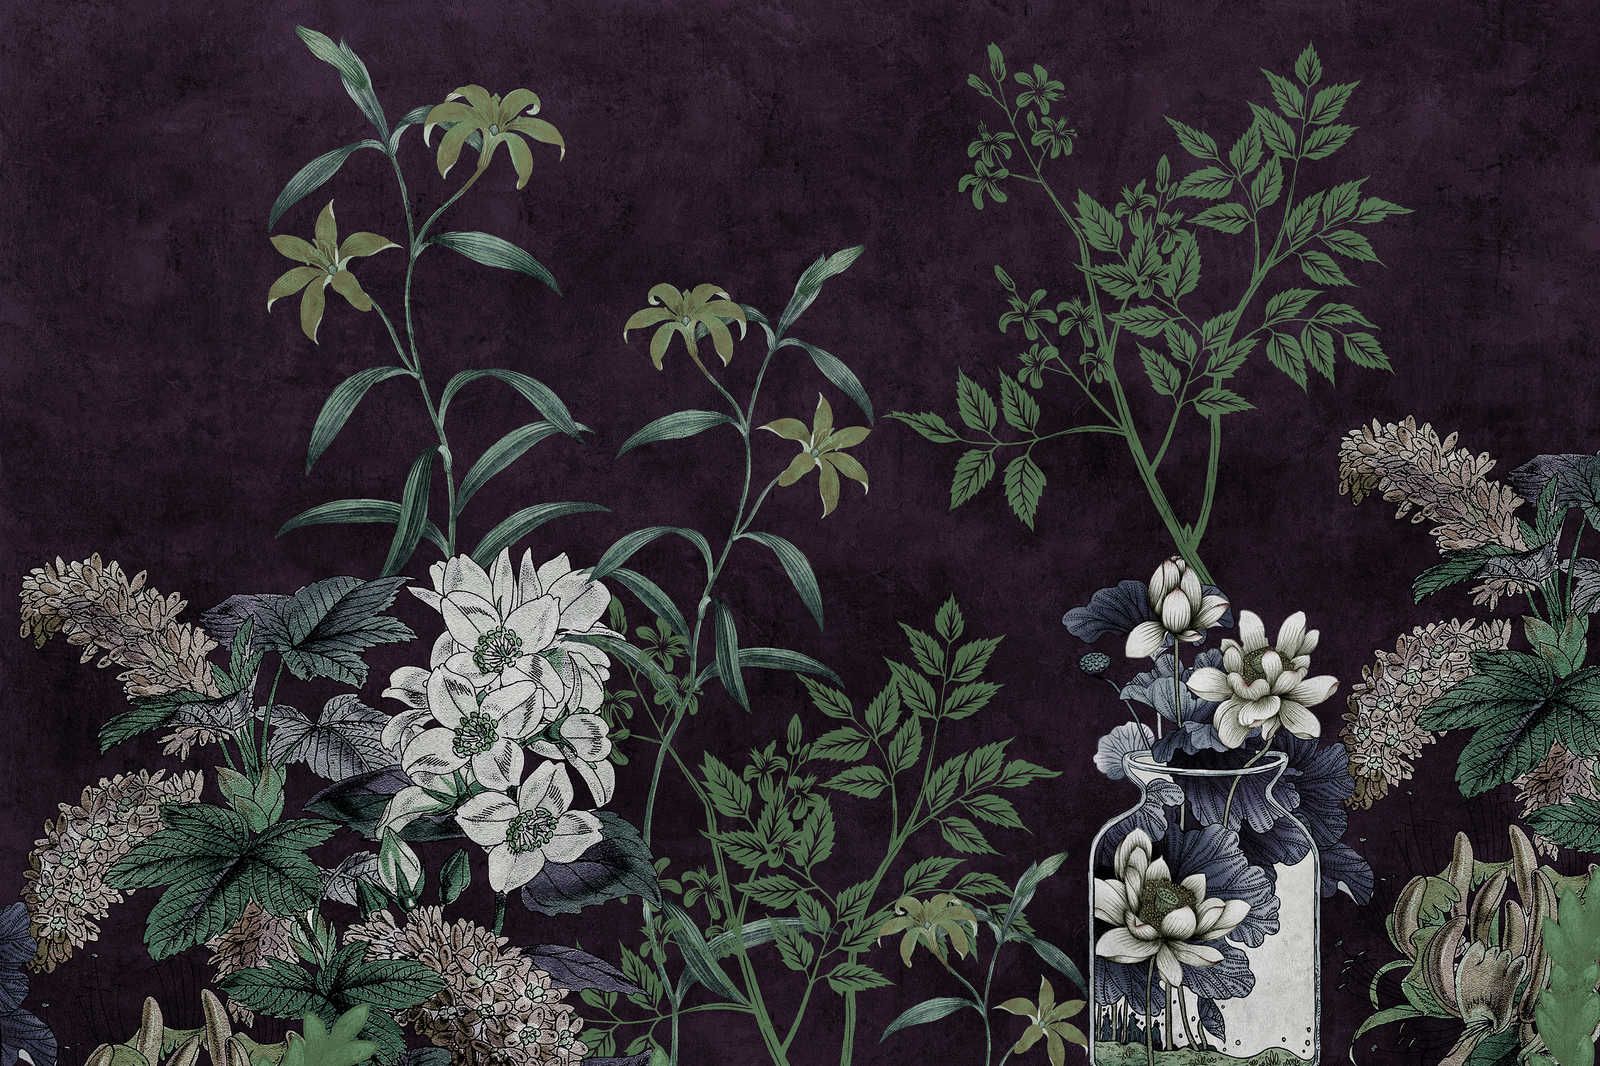             Dark Room 1 - Toile noire motif botanique vert - 0,90 m x 0,60 m
        